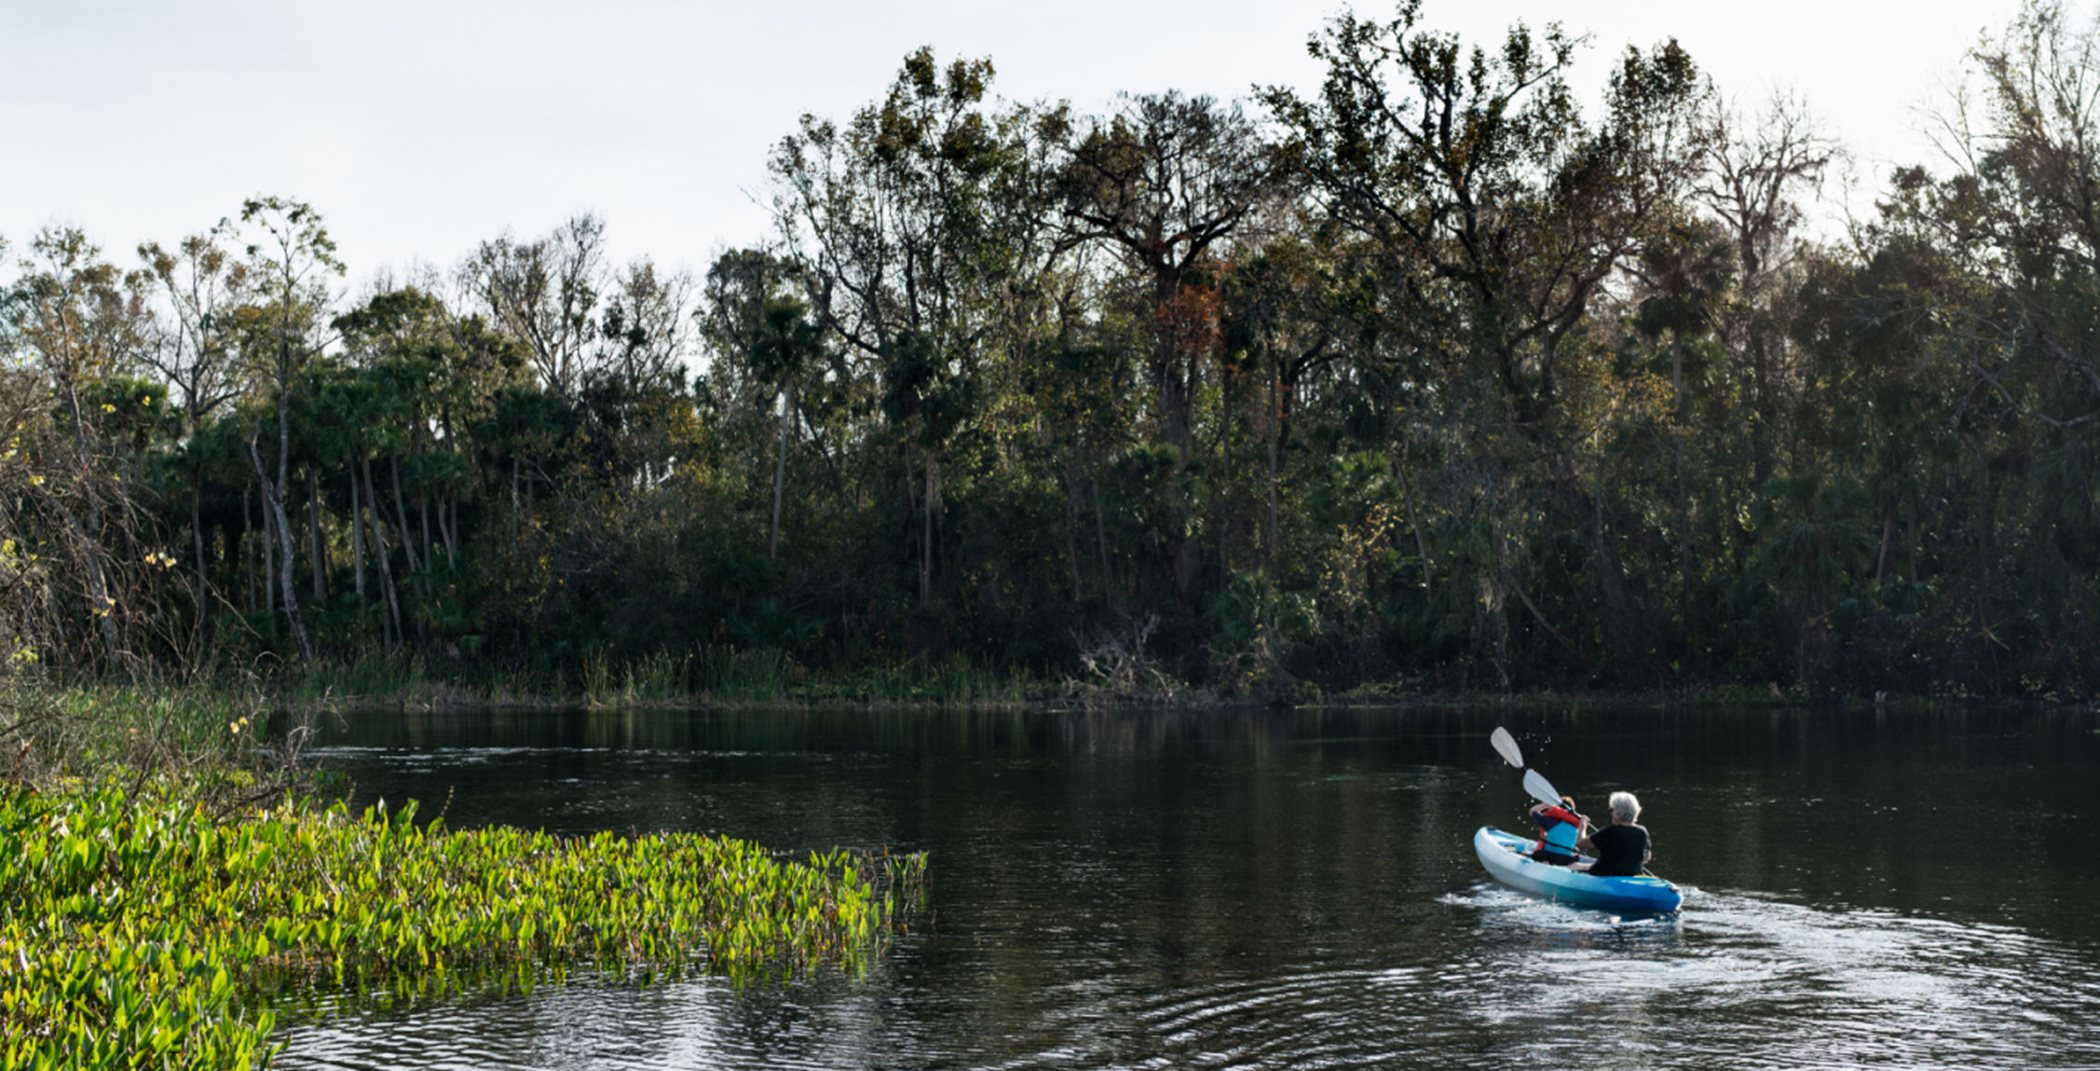 Nearby kayak, canoe or go paddle-boarding 